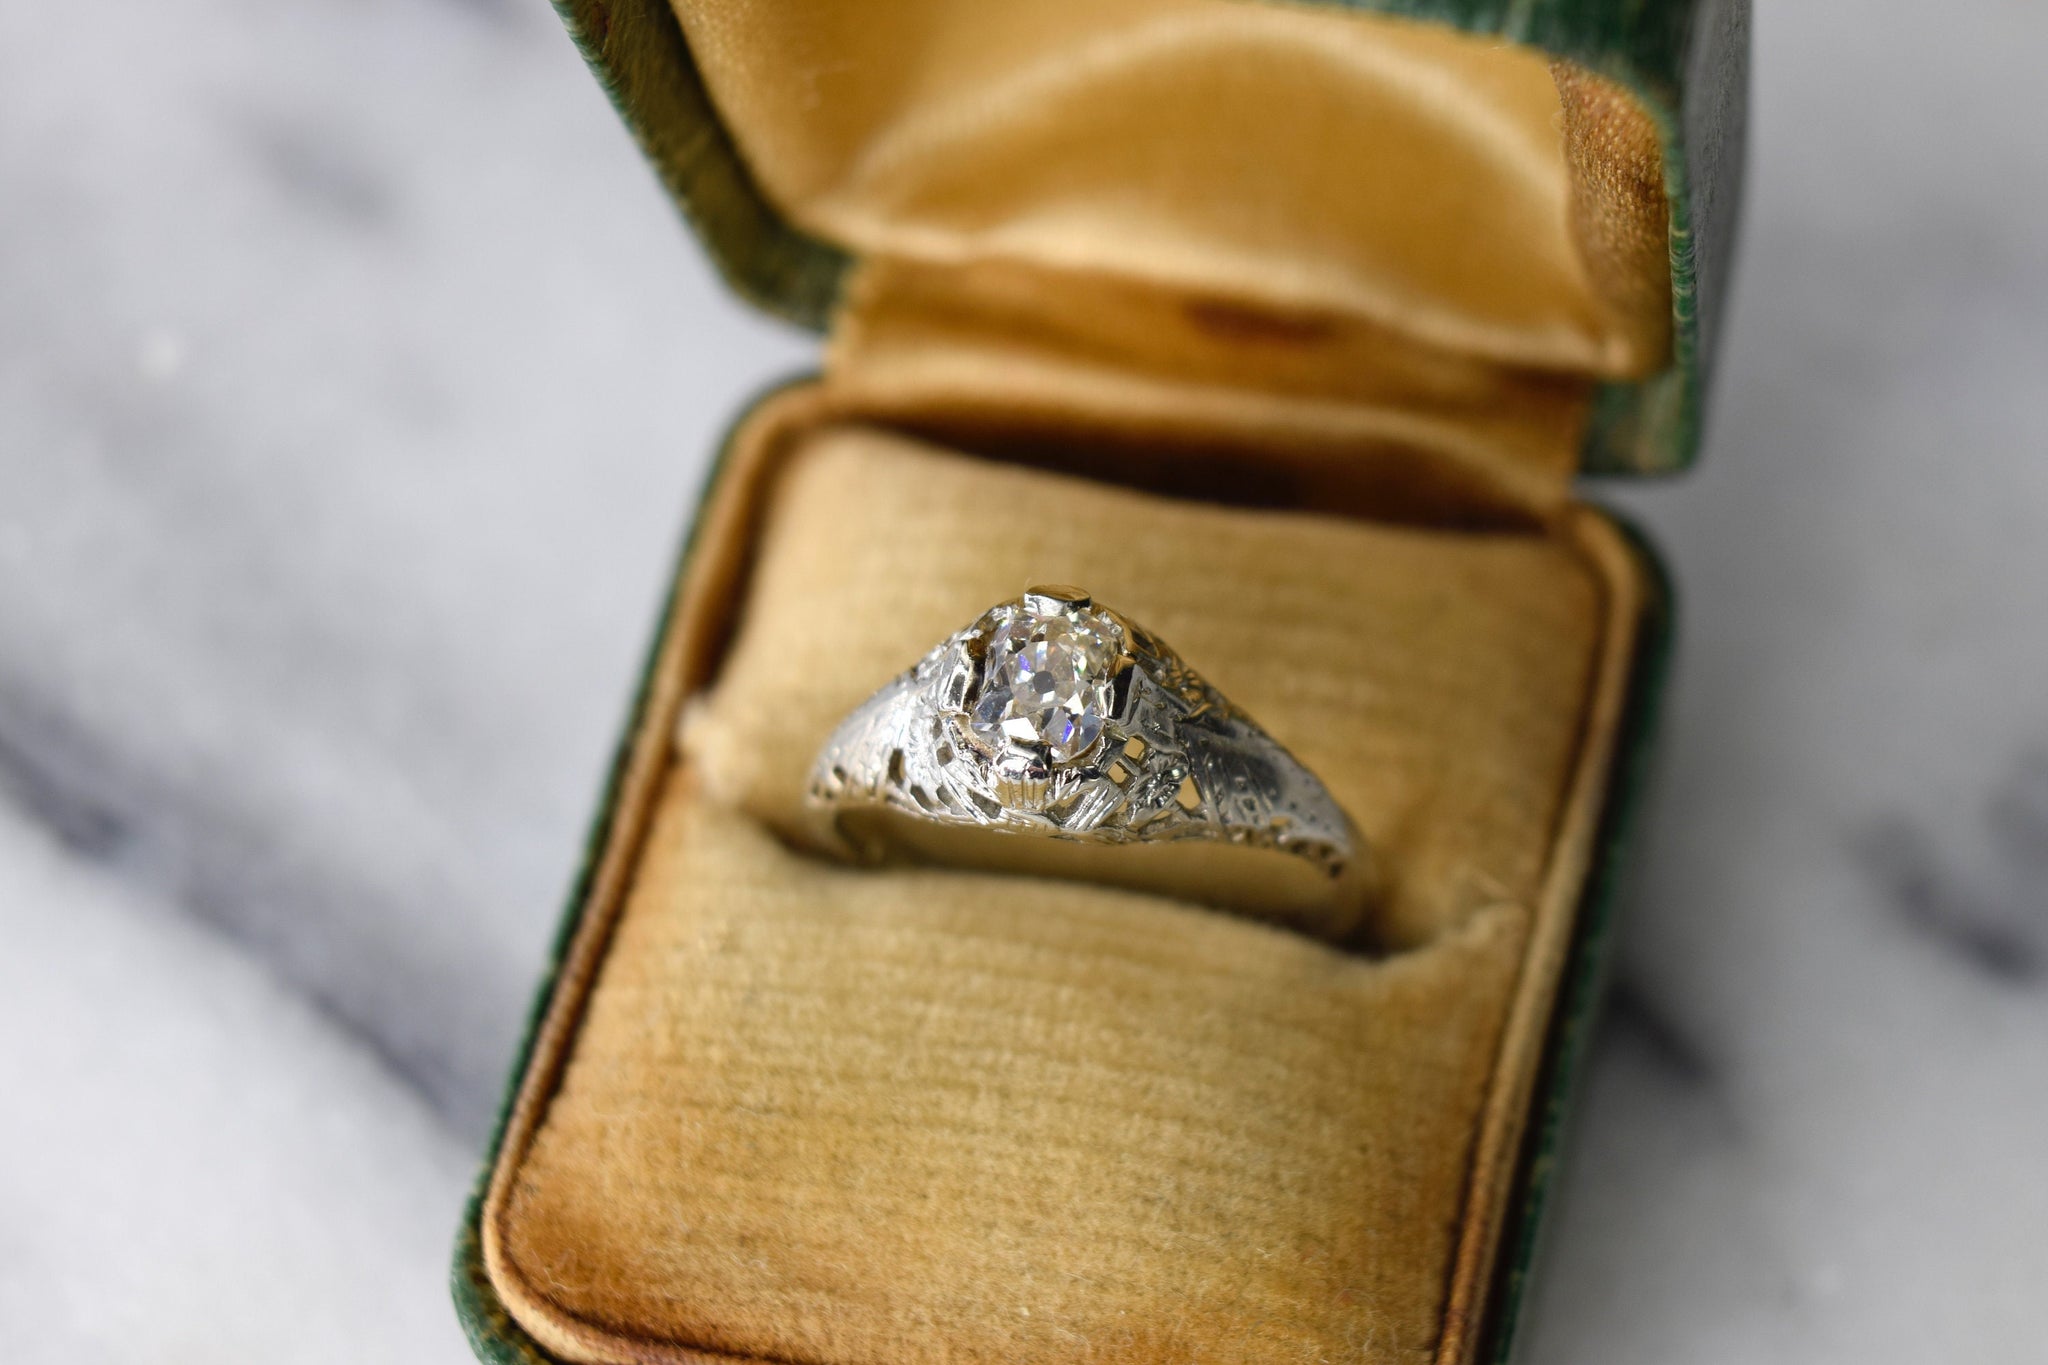 Antique Art Deco 18k White Gold Old Mine Cut Diamond Ring c.1920s